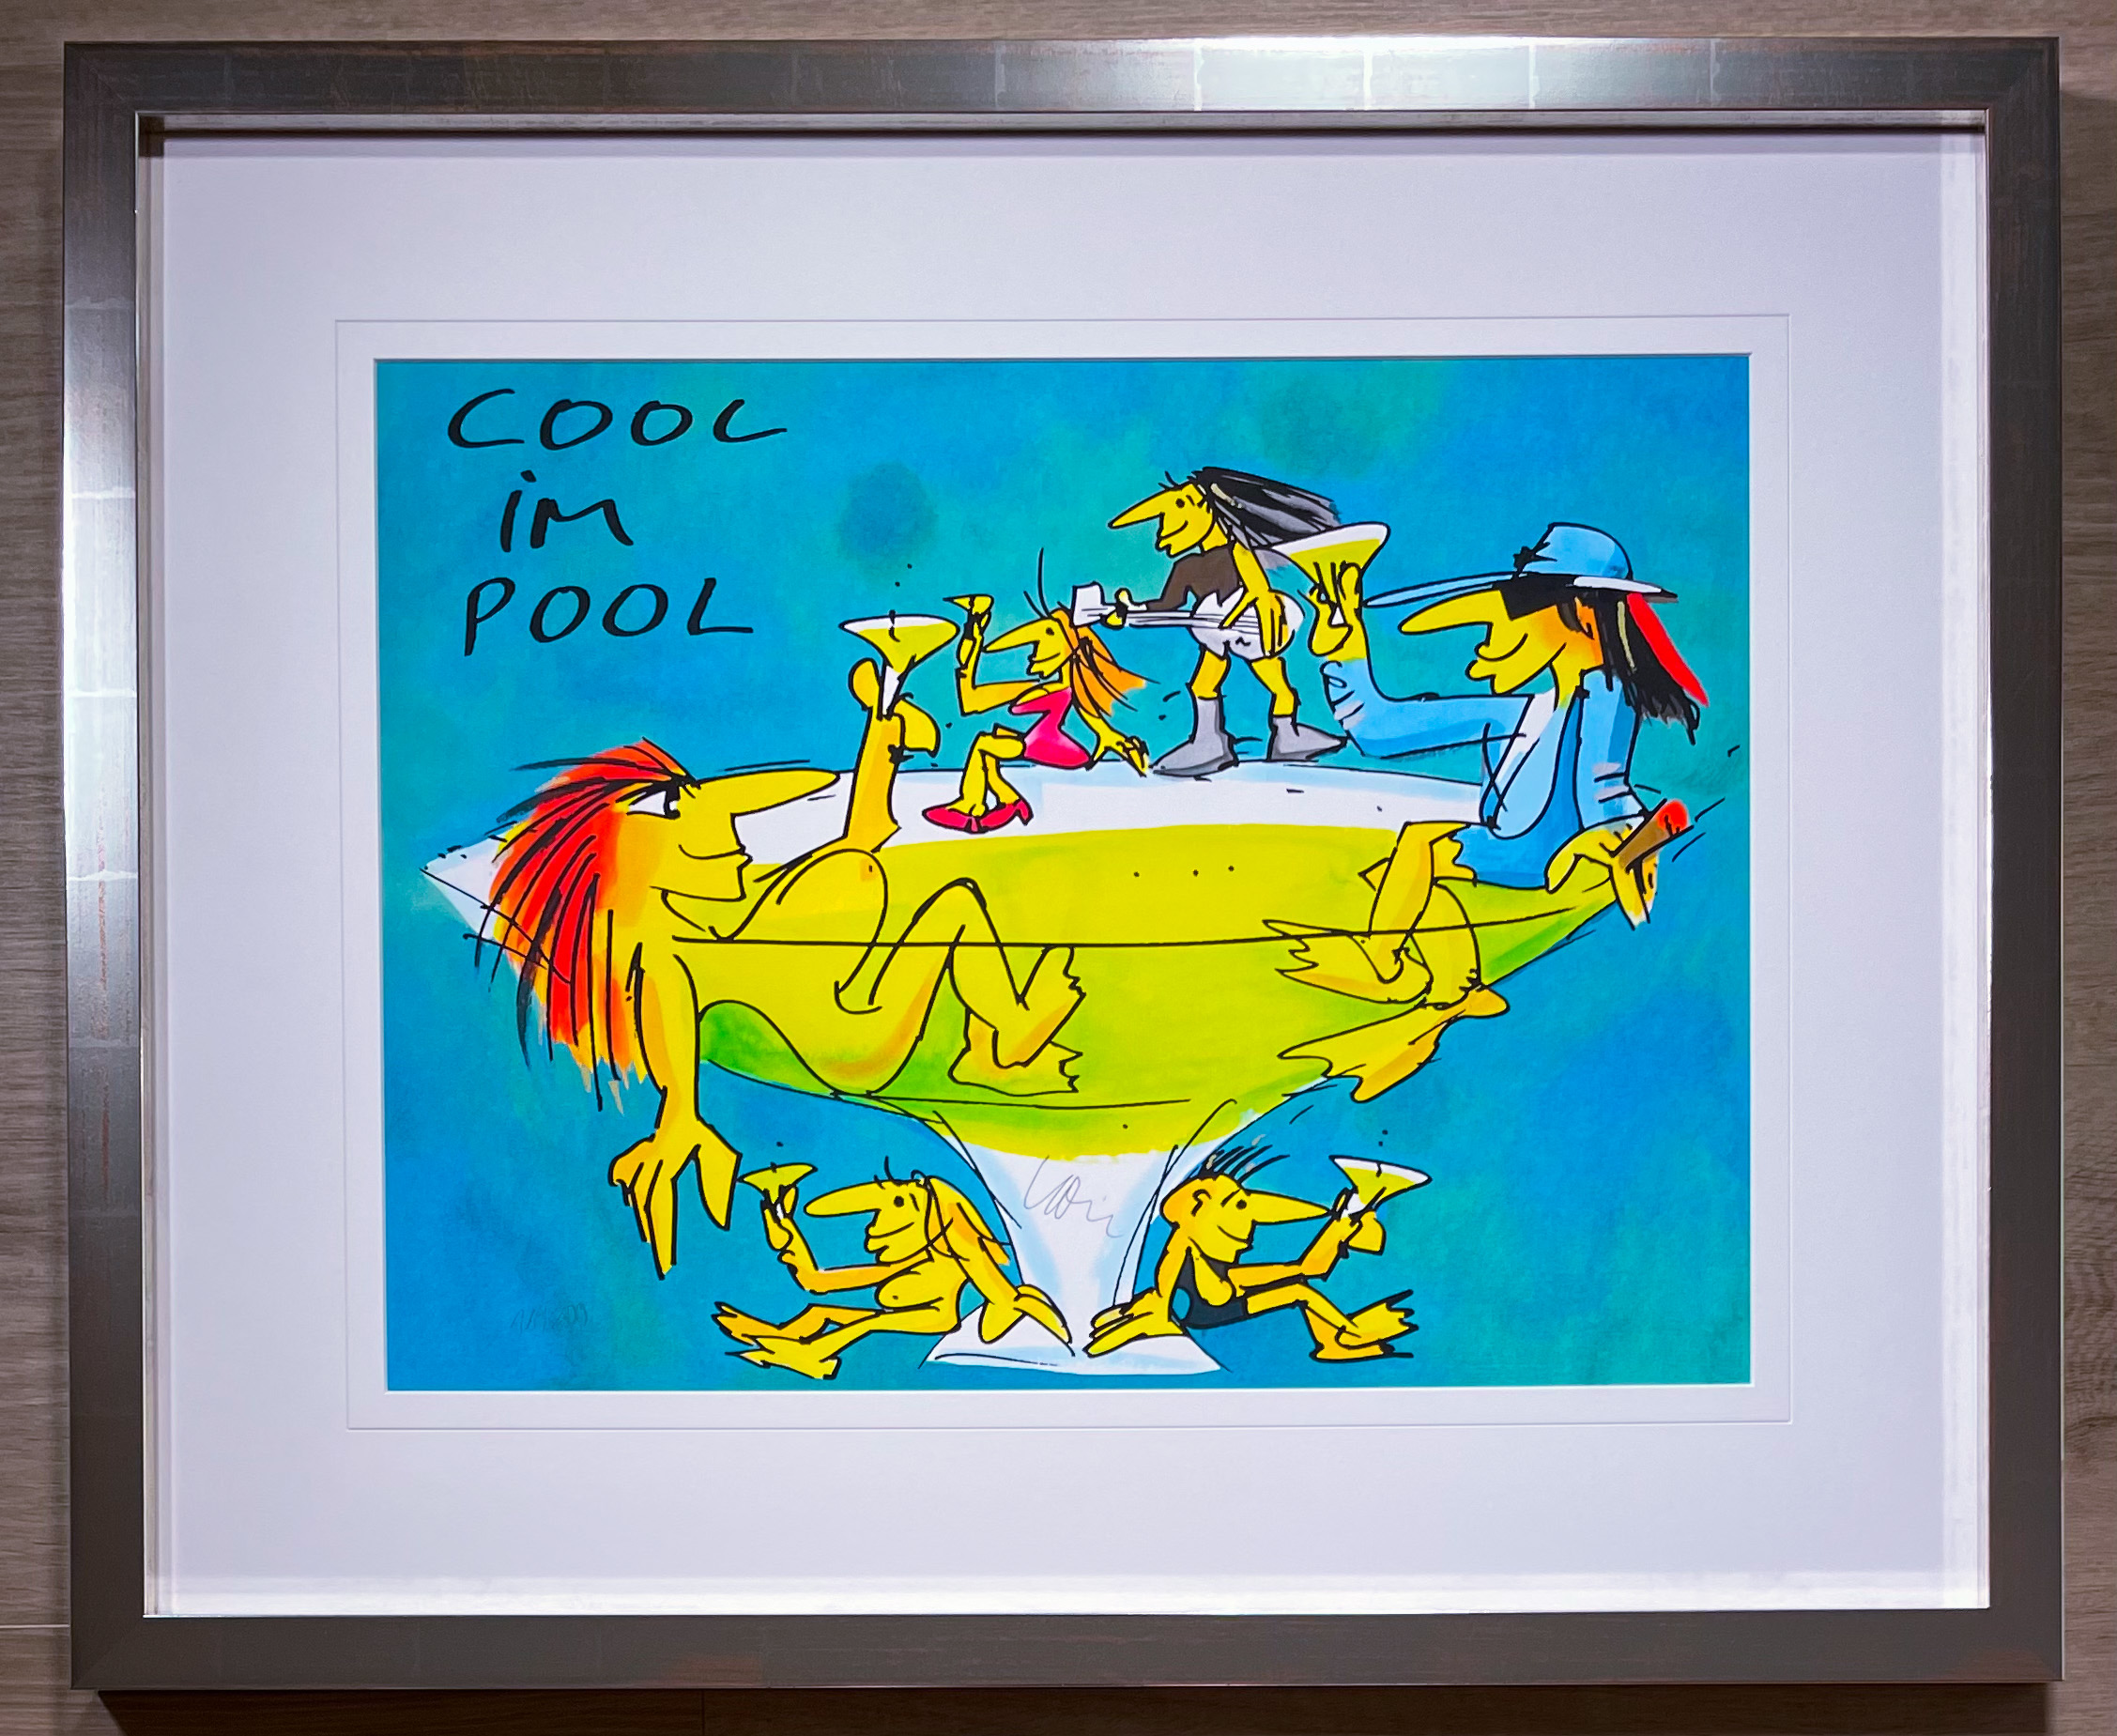 Udo Lindenberg "Cool im Pool"